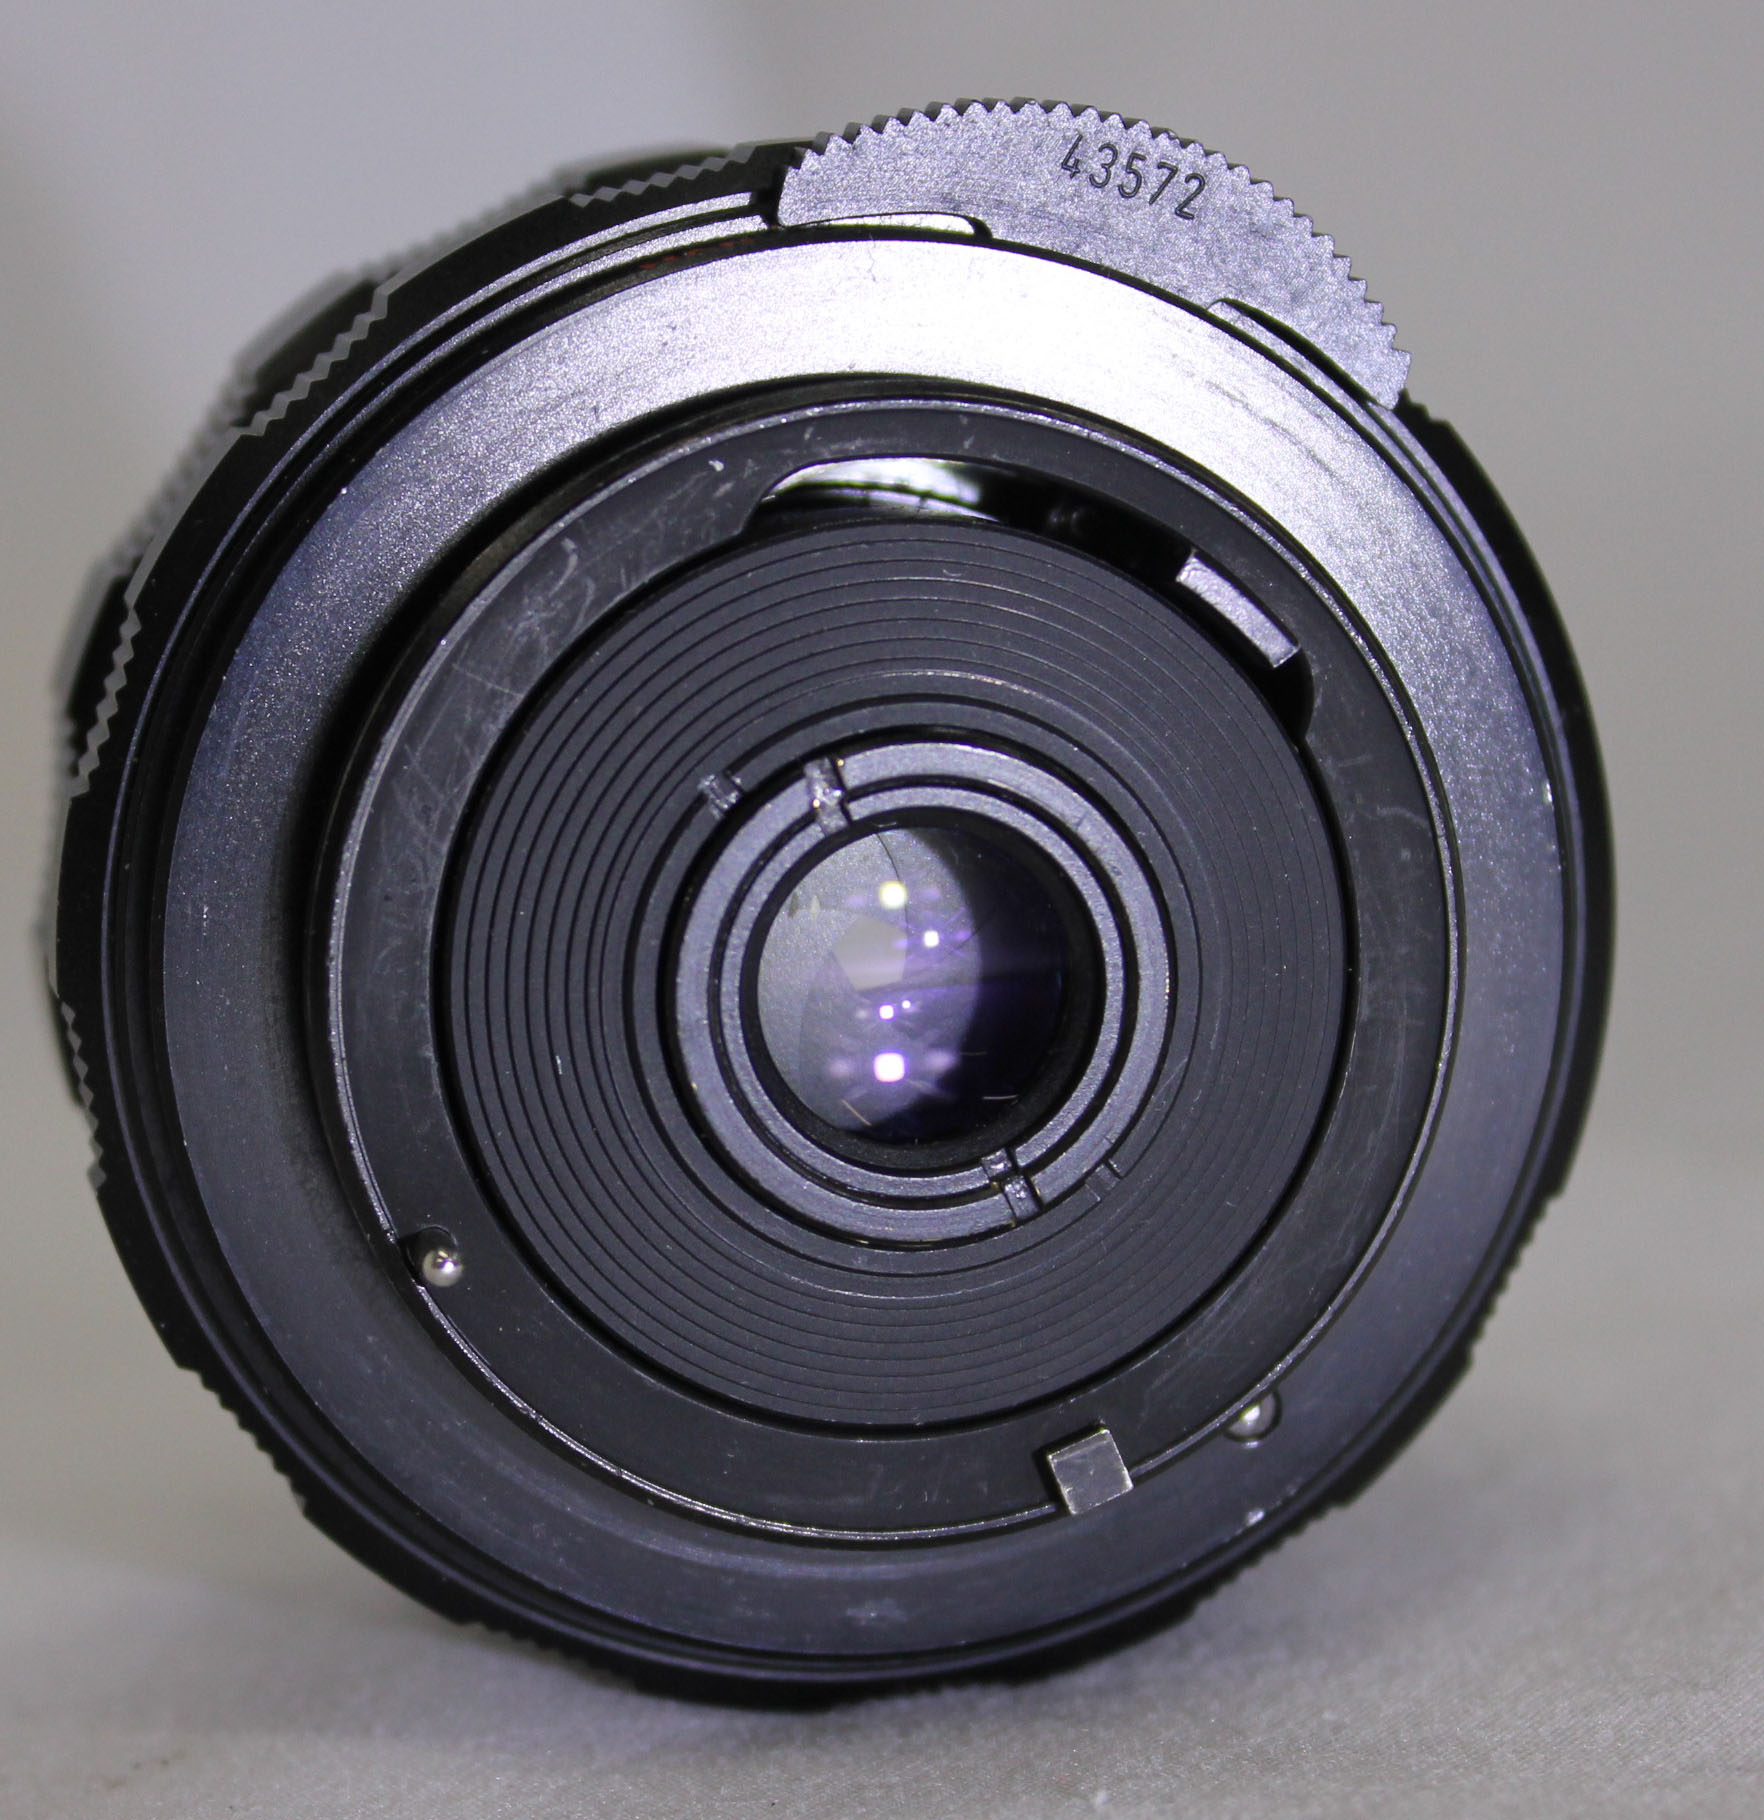 Asahi Pentax Spotmatic F SPF mm SLR Camera w/ SMC Super Multi